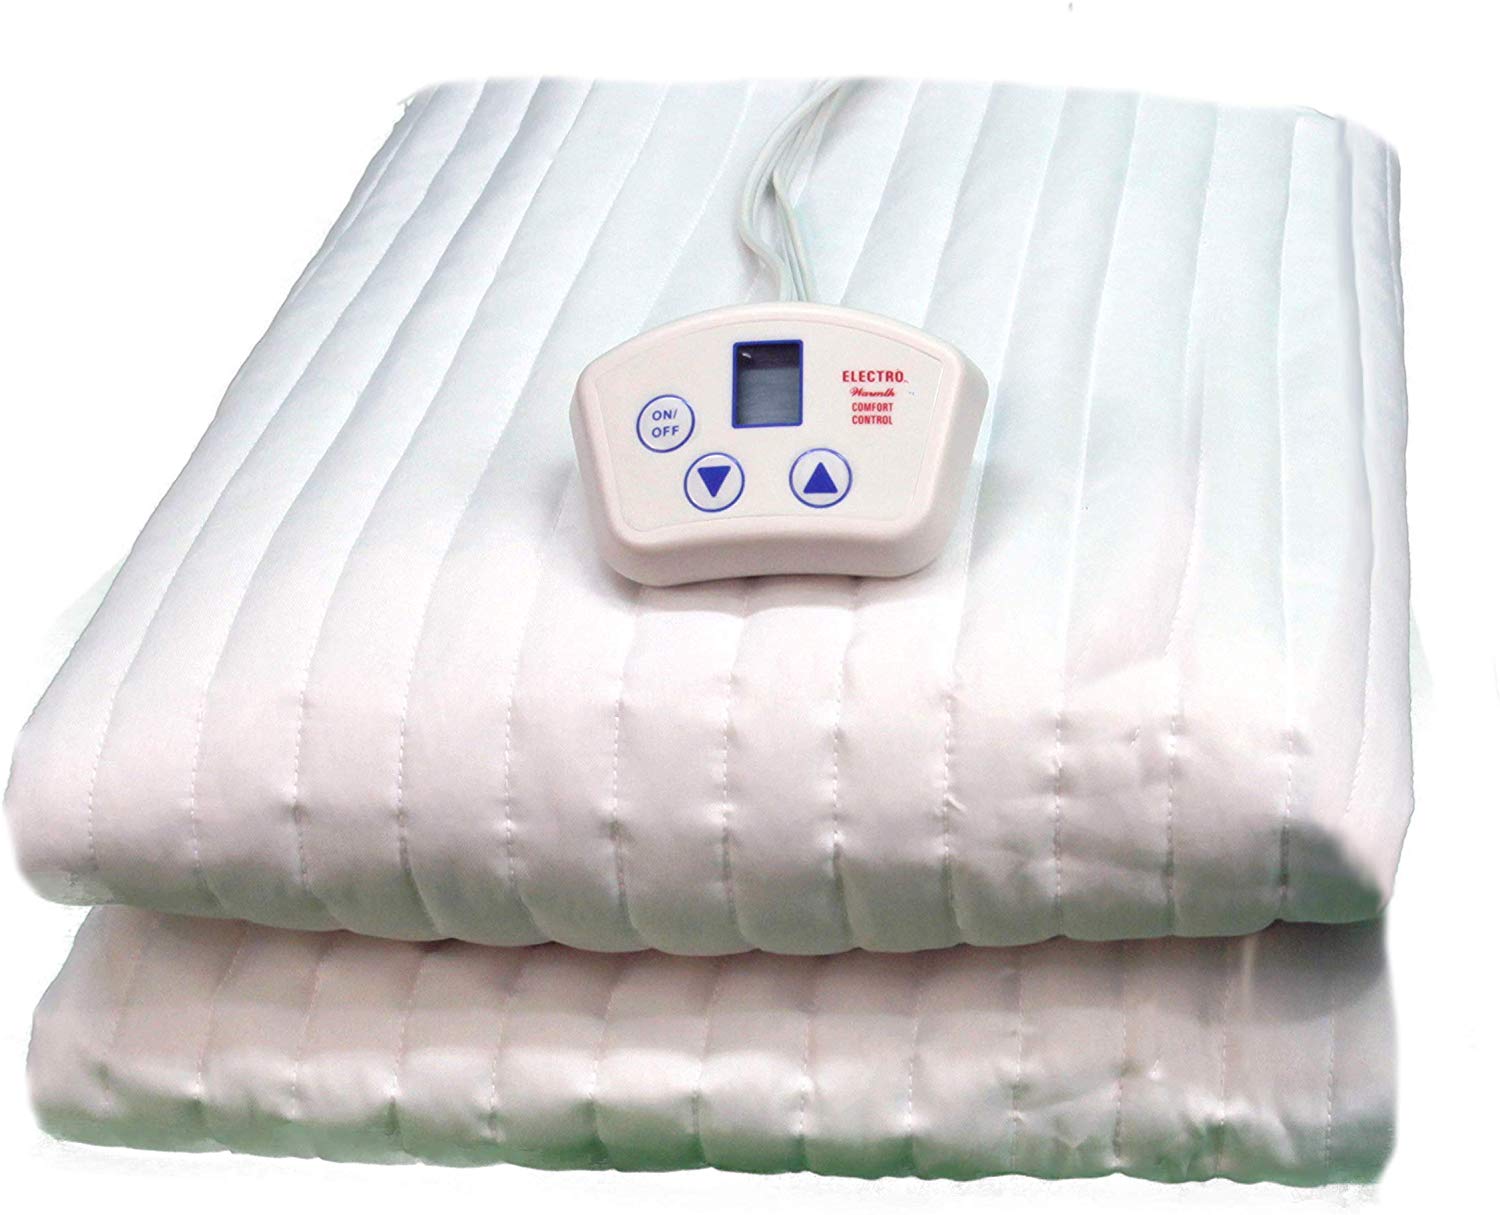 waterproof low voltage electric warming mattress pad serta